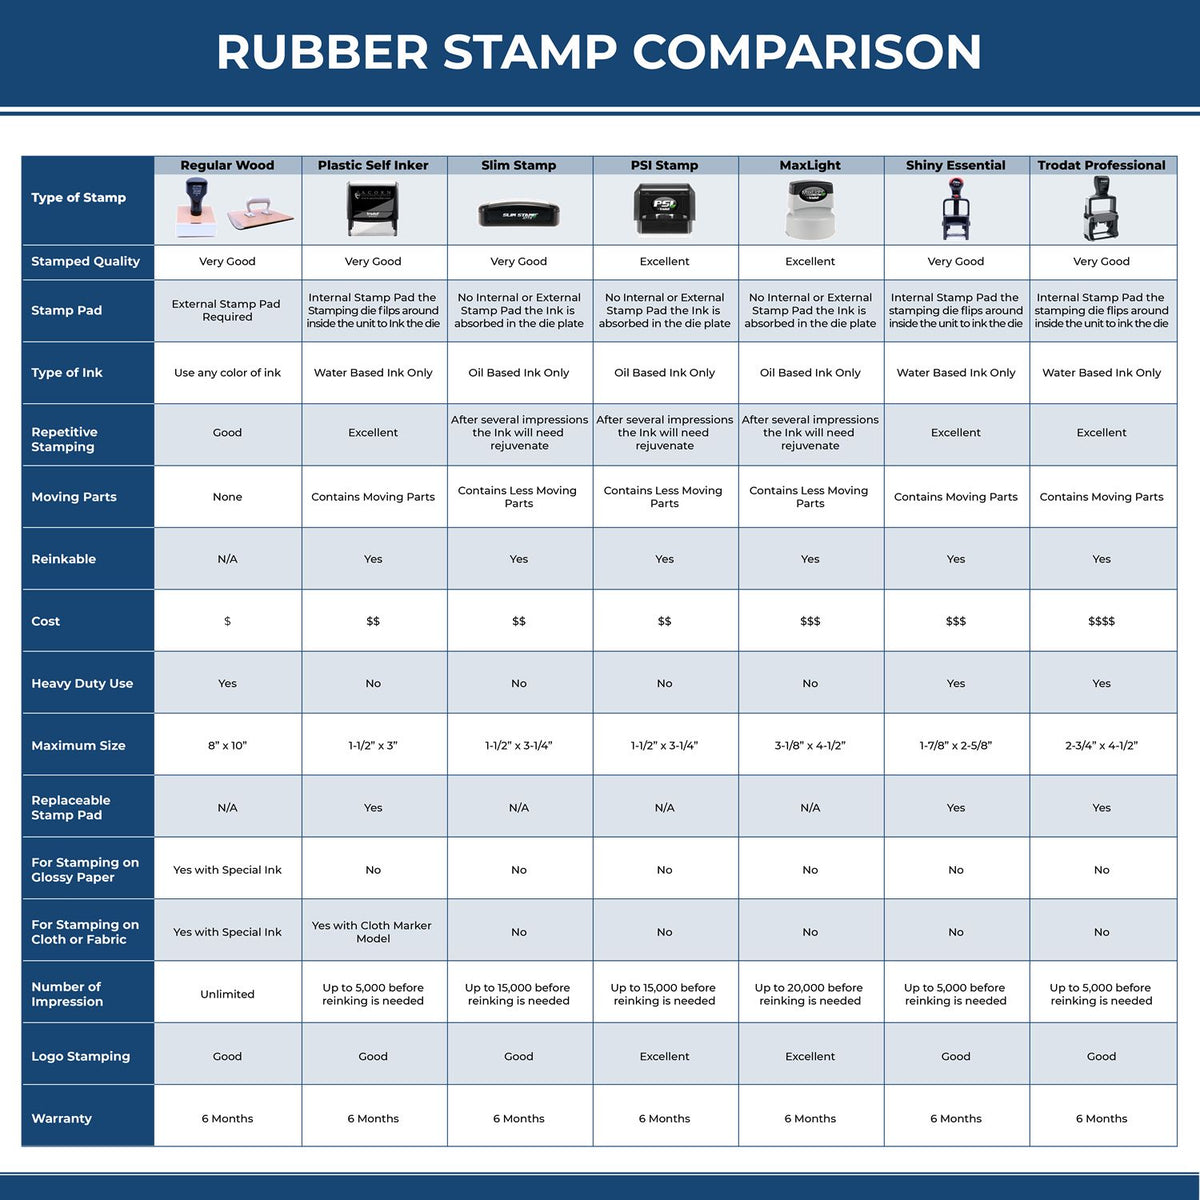 Large E-Mail Rubber Stamp 4848R Rubber Stamp Comparison